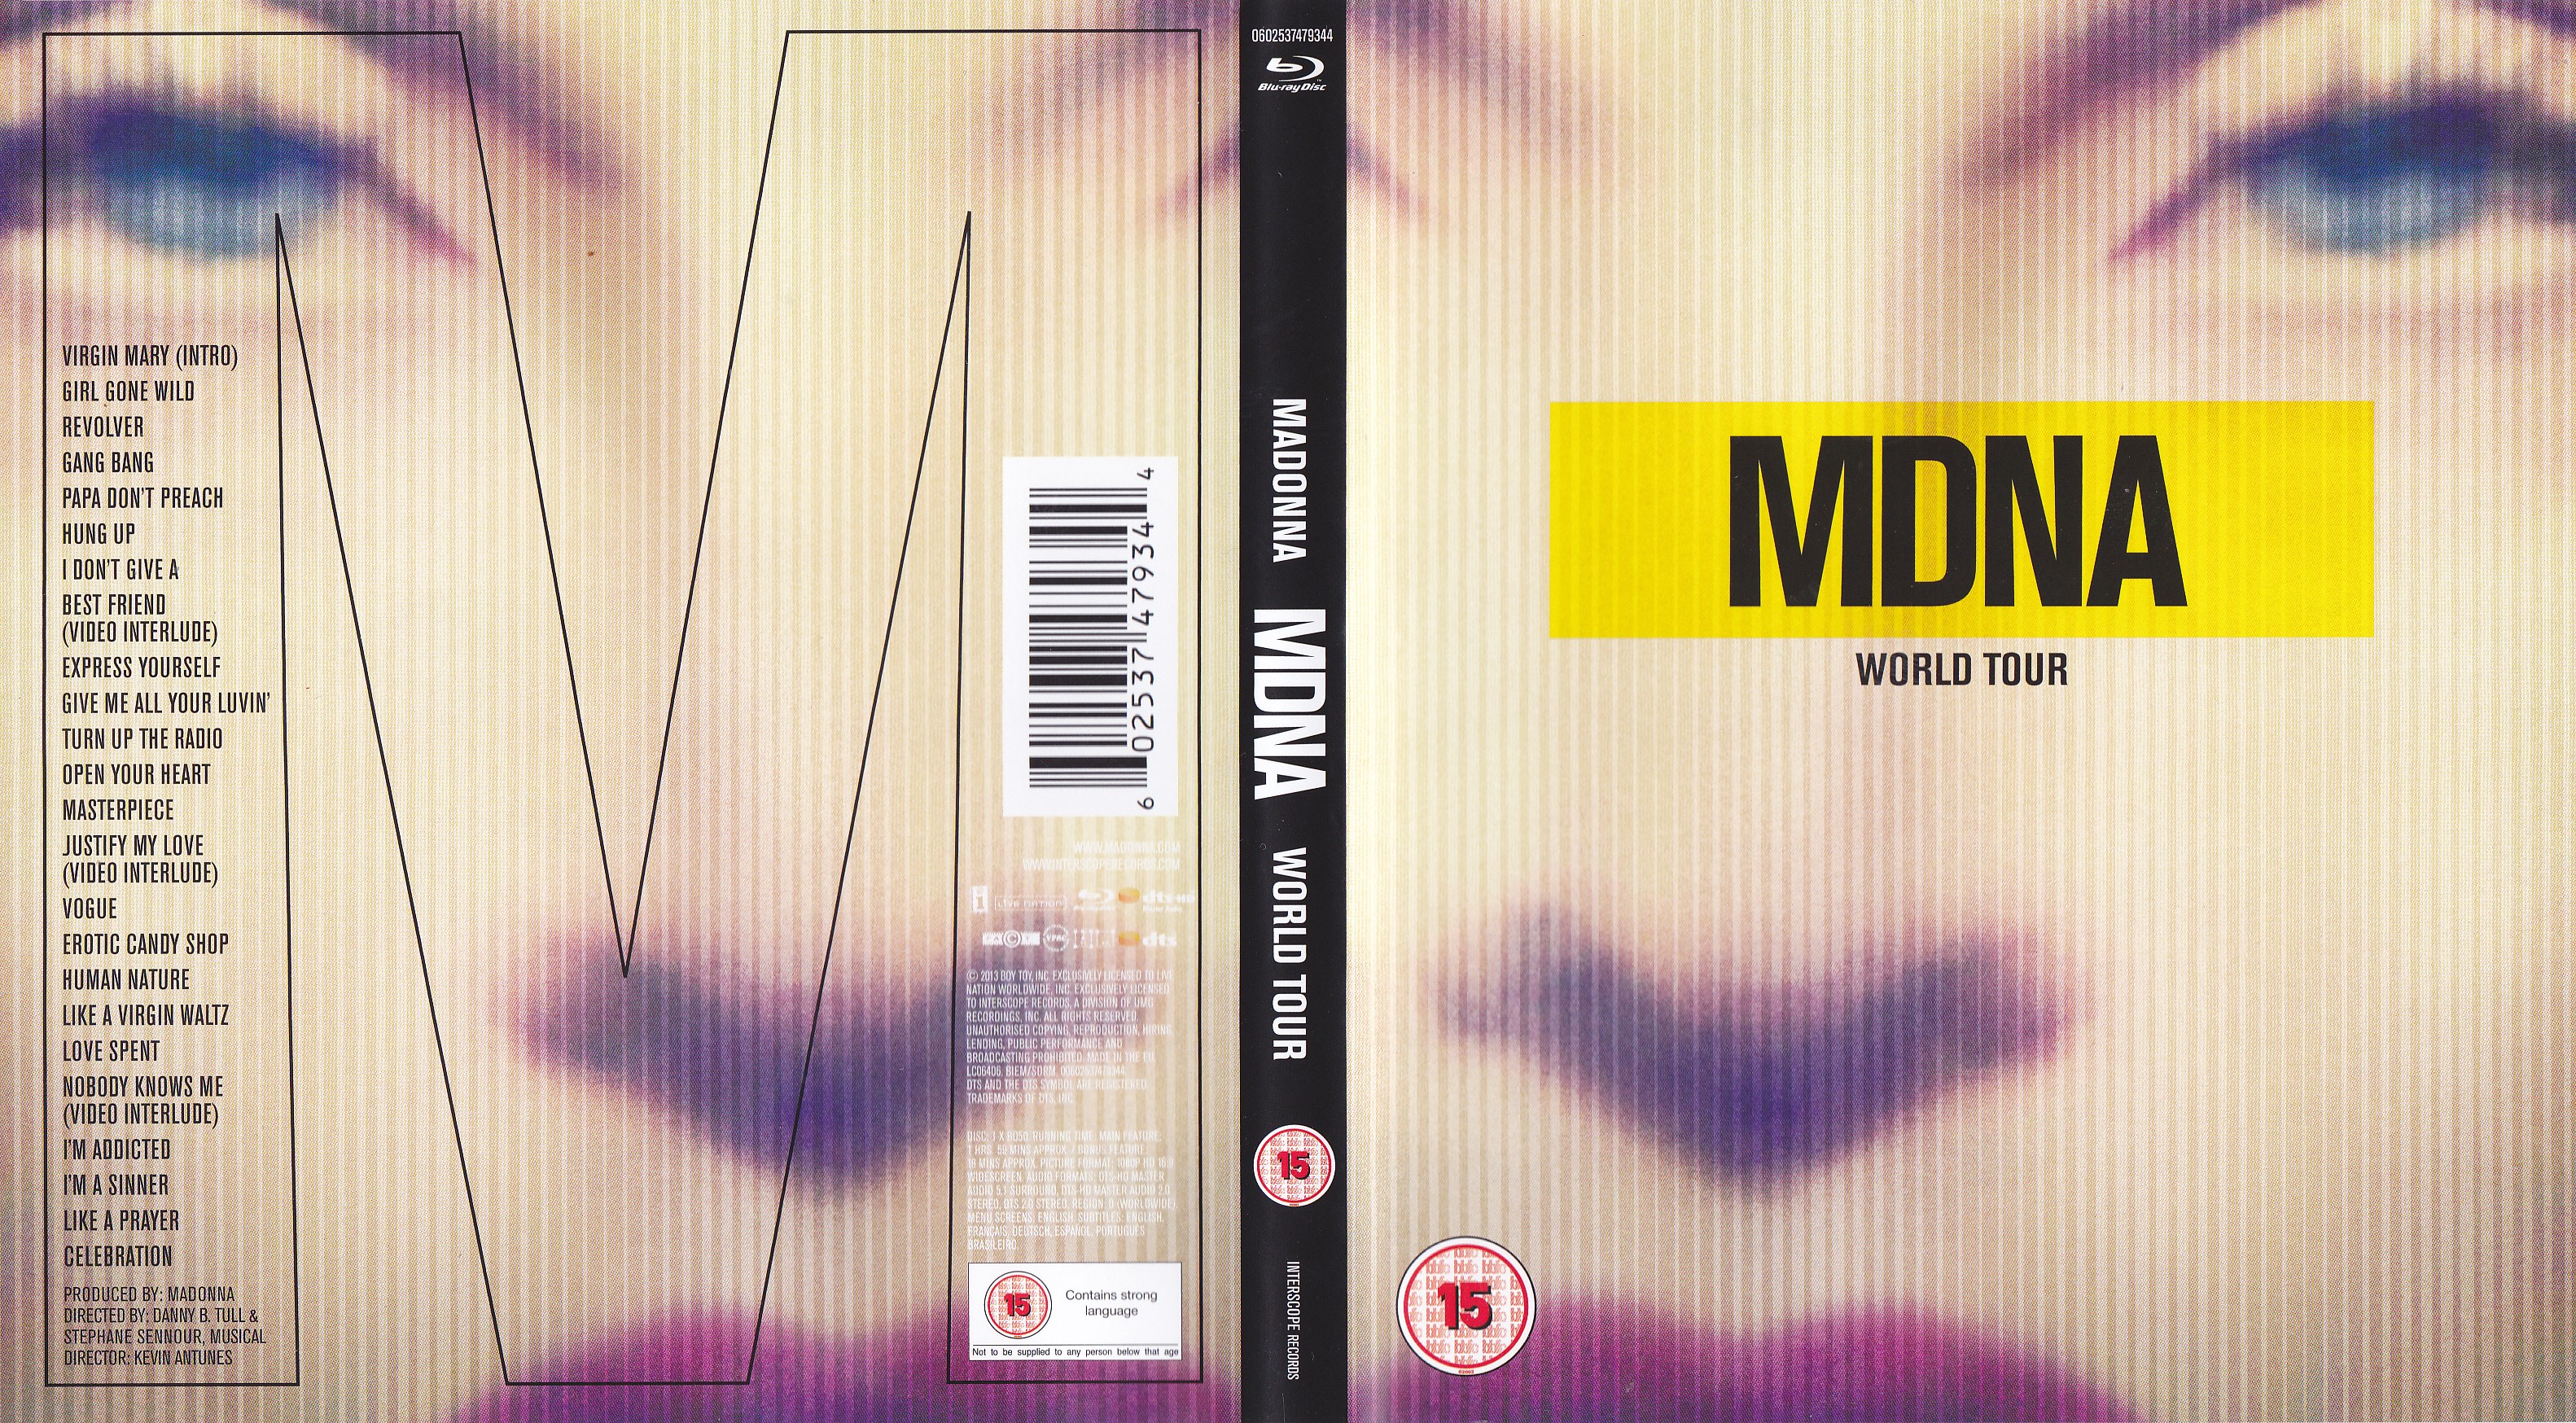 Jaquette DVD MDNA World Tour (BLU-RAY)